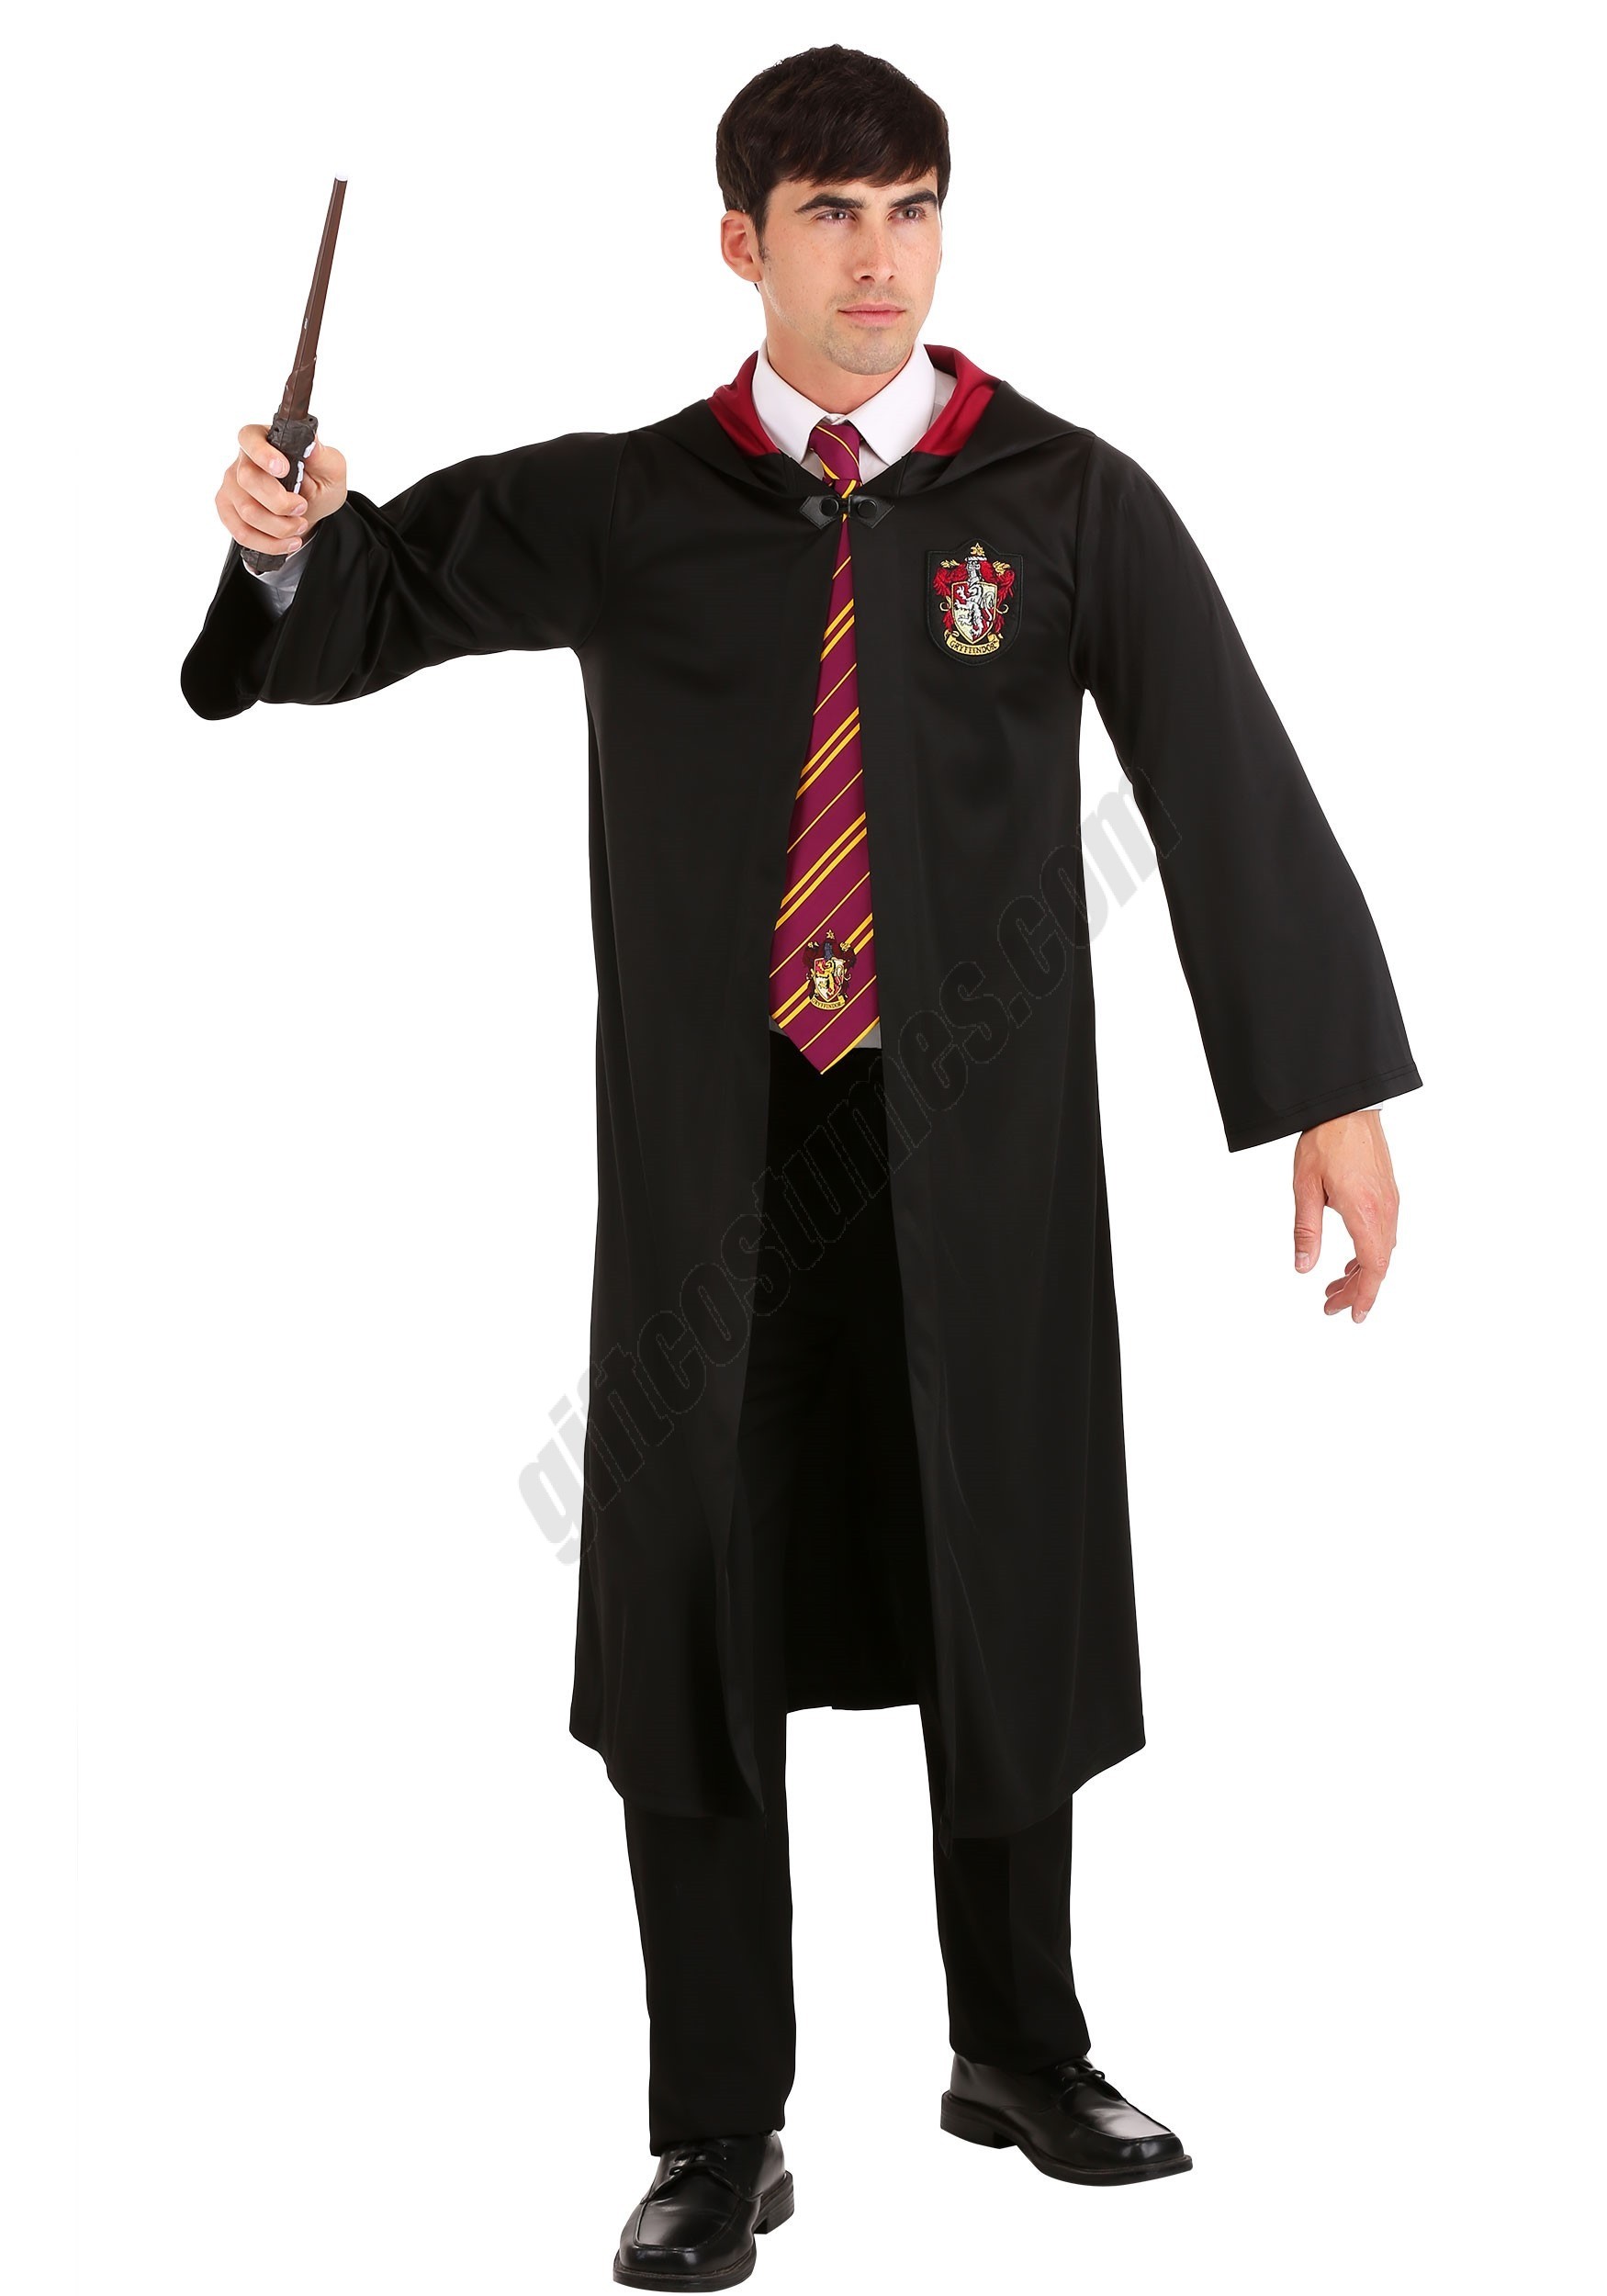 Harry Potter Plus Size Gryffindor Robe Costume Promotions - Harry Potter Plus Size Gryffindor Robe Costume Promotions